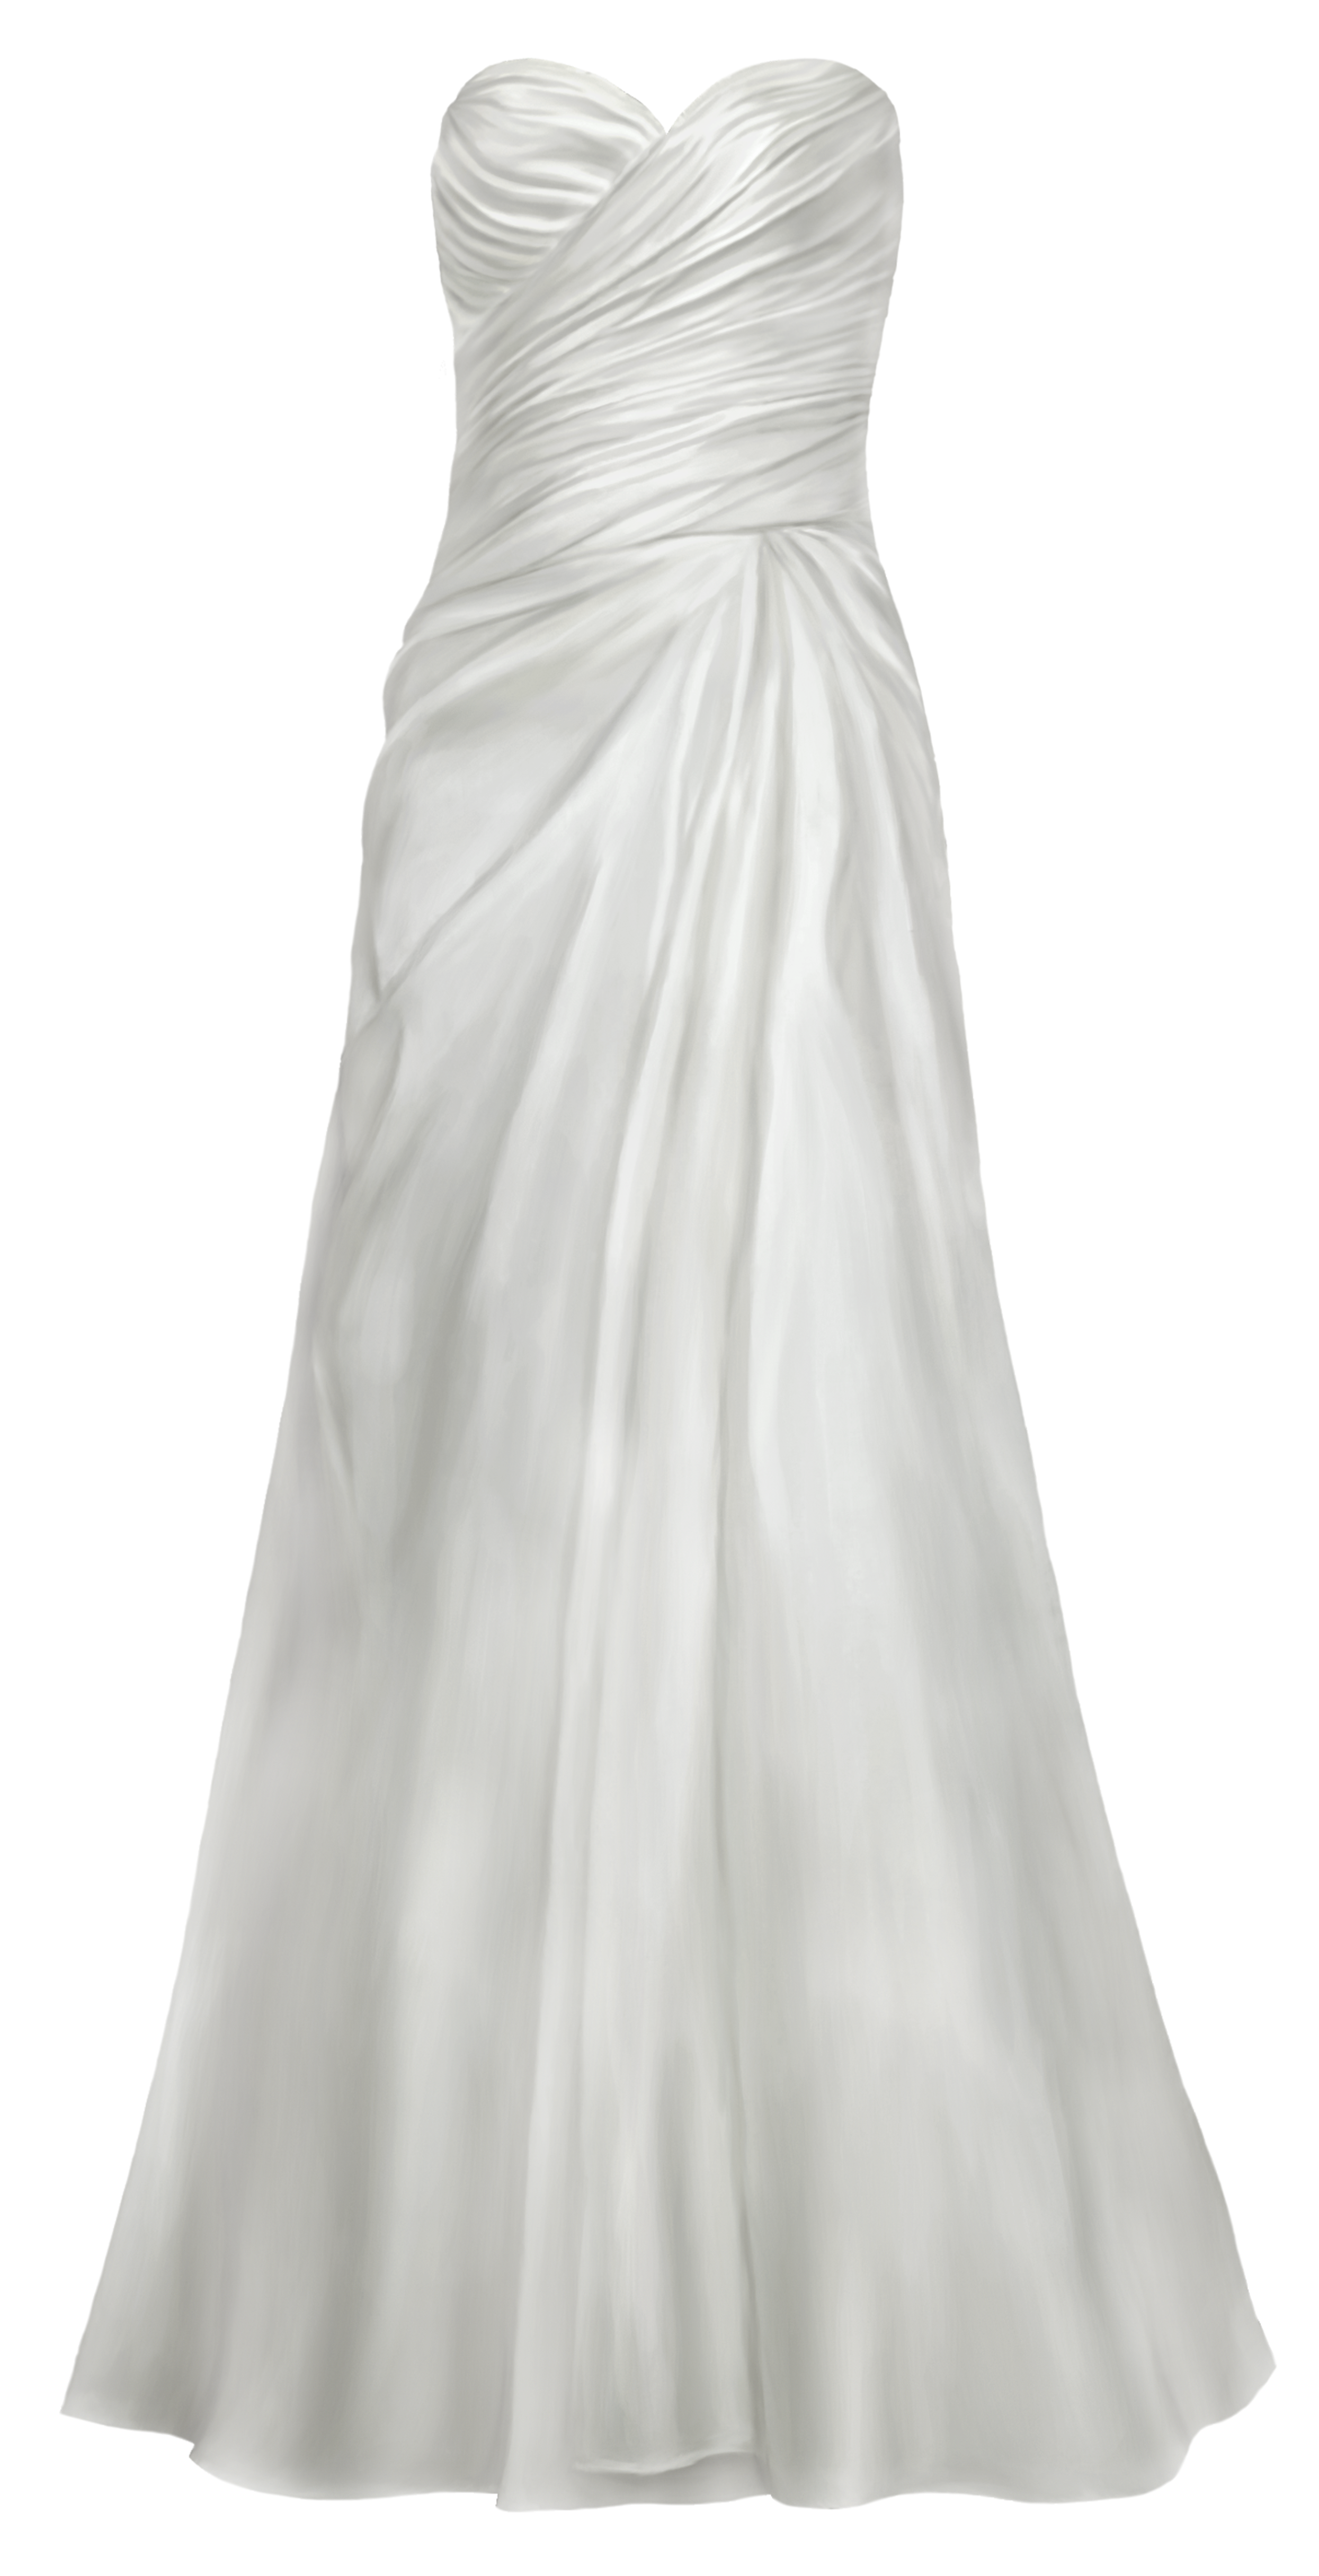 Diamond clipart dress. Satin wedding png clip